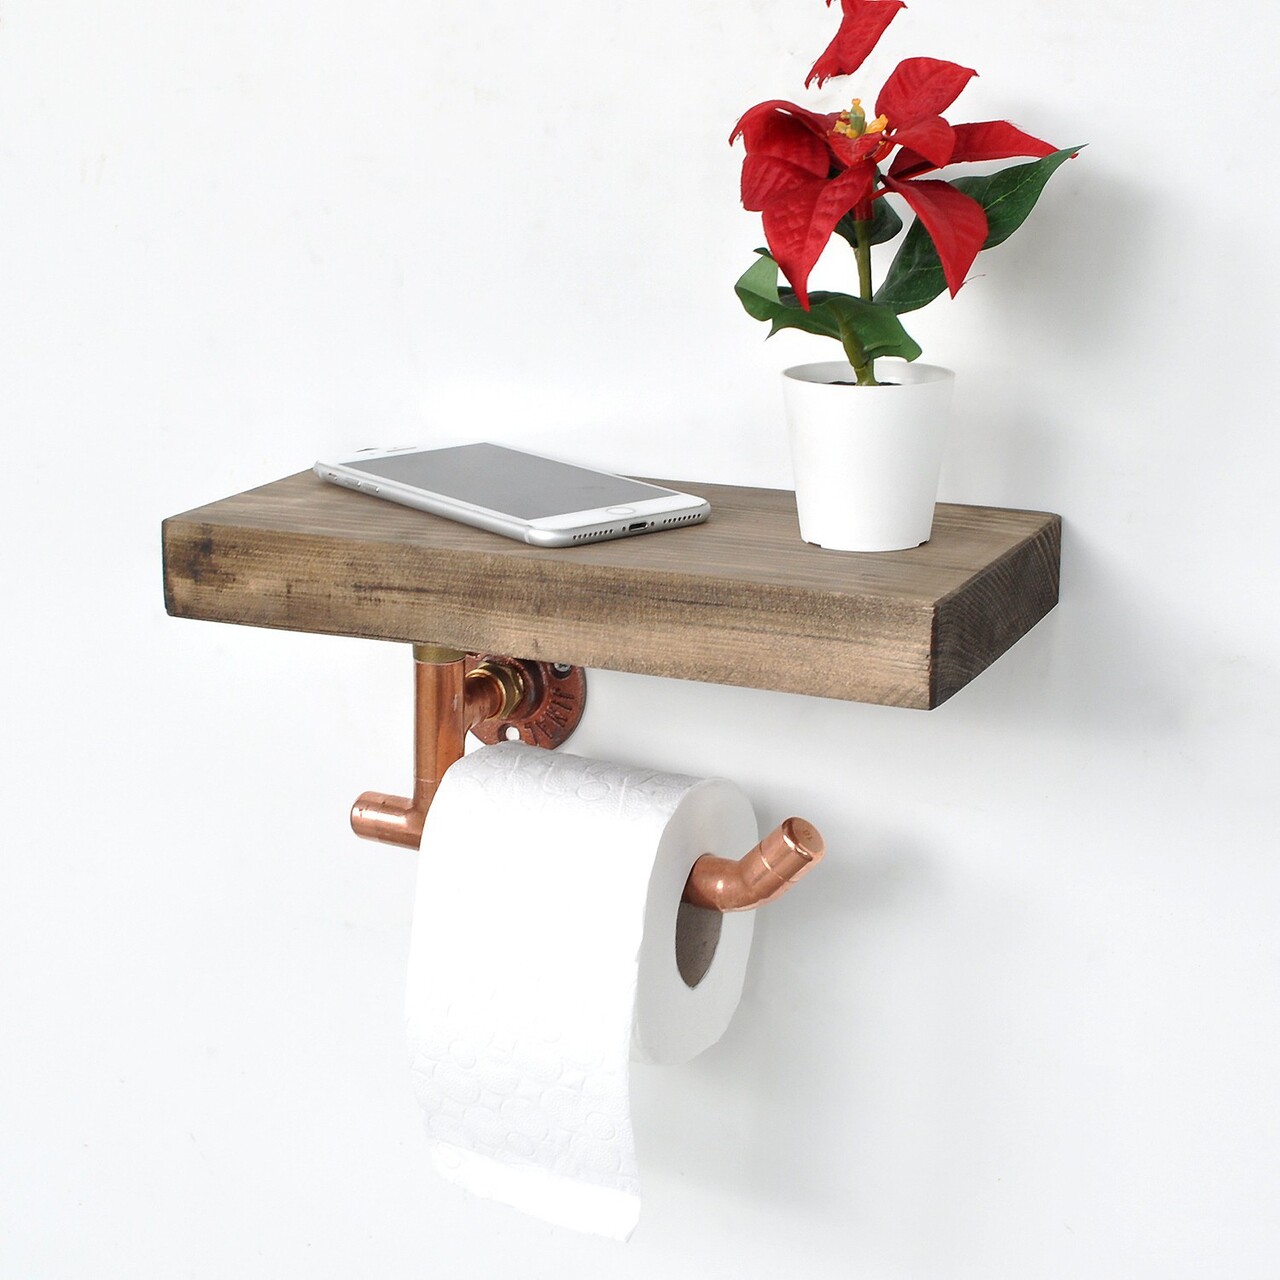 Evila Originals WC papírtartó polccal, 30x14x15 cm, lucfenyő, barna